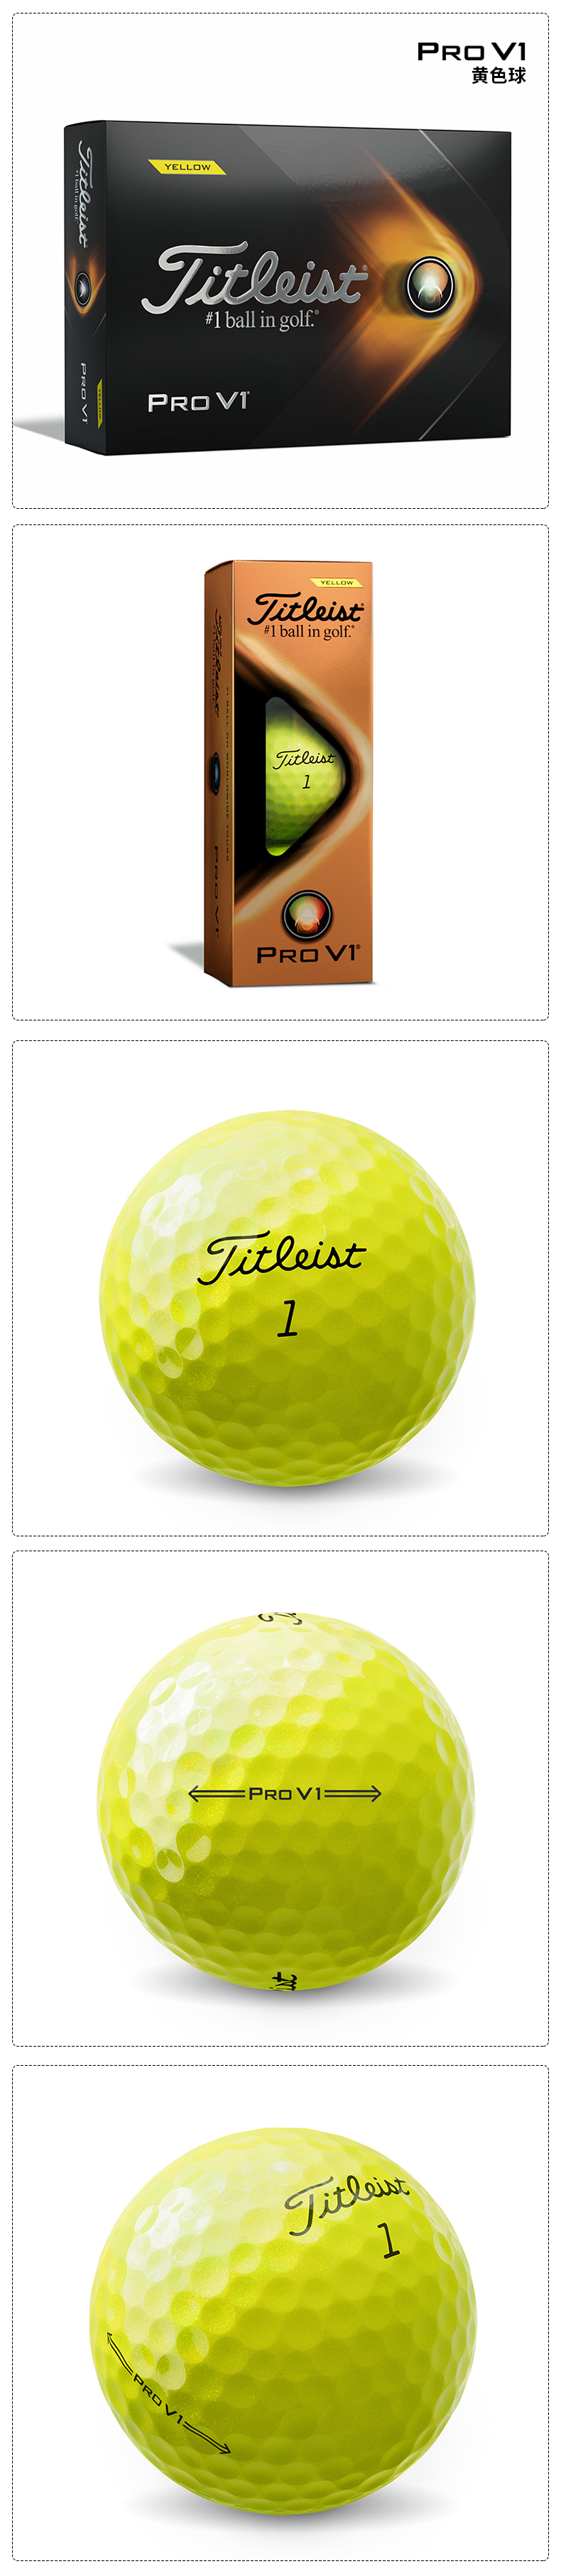 Titleist Pro V1x 高尔夫球 众多巡回赛选手信赖